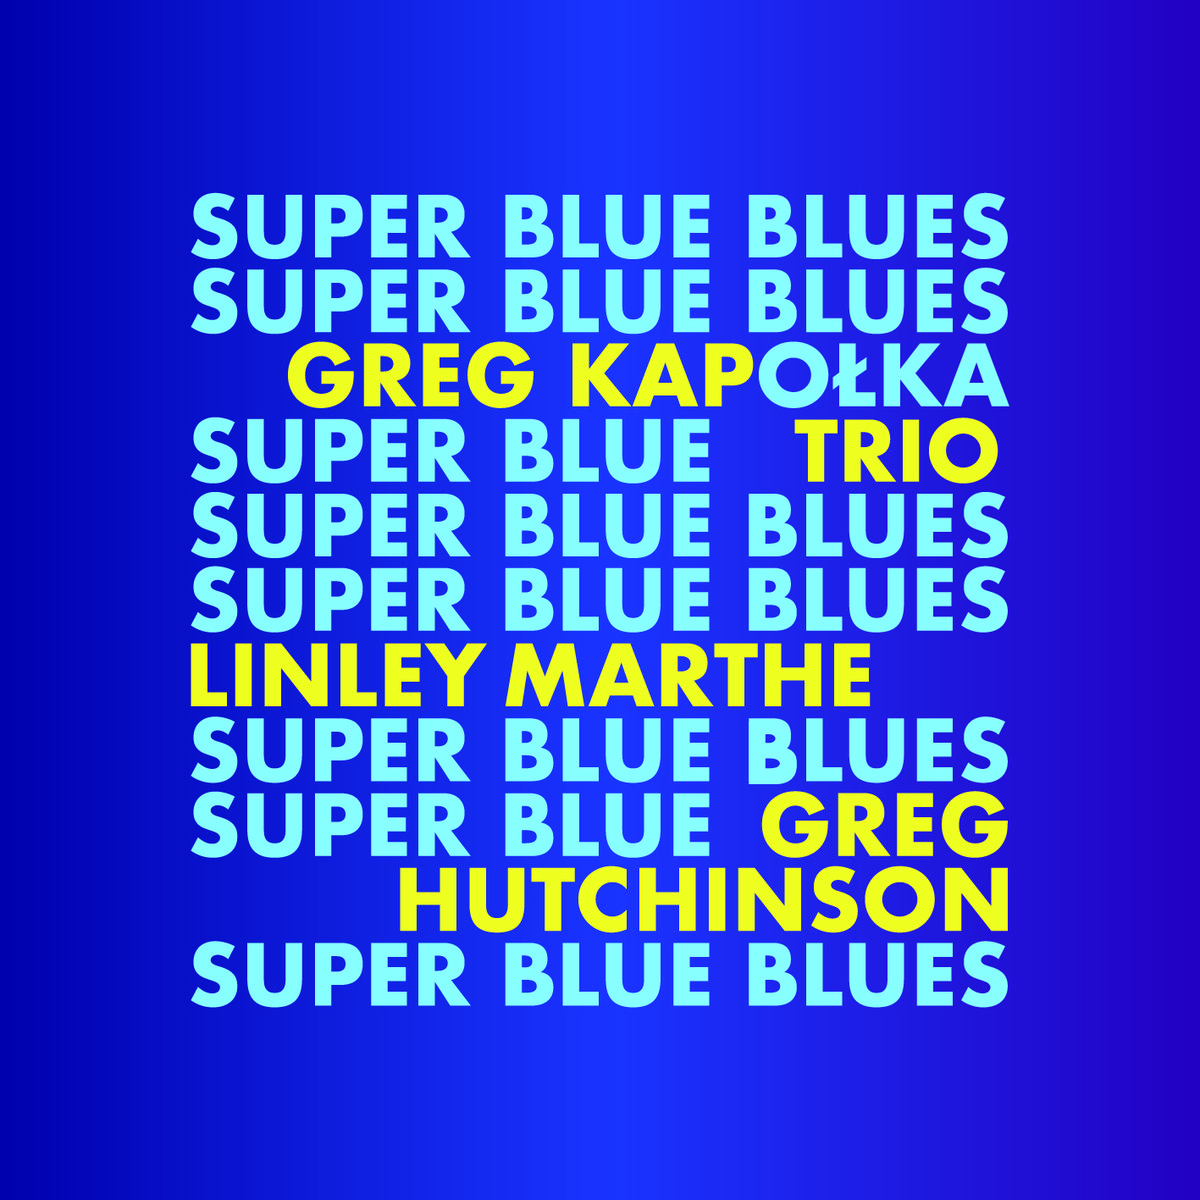 Kapołka Greg Trio – Super Blue Blues